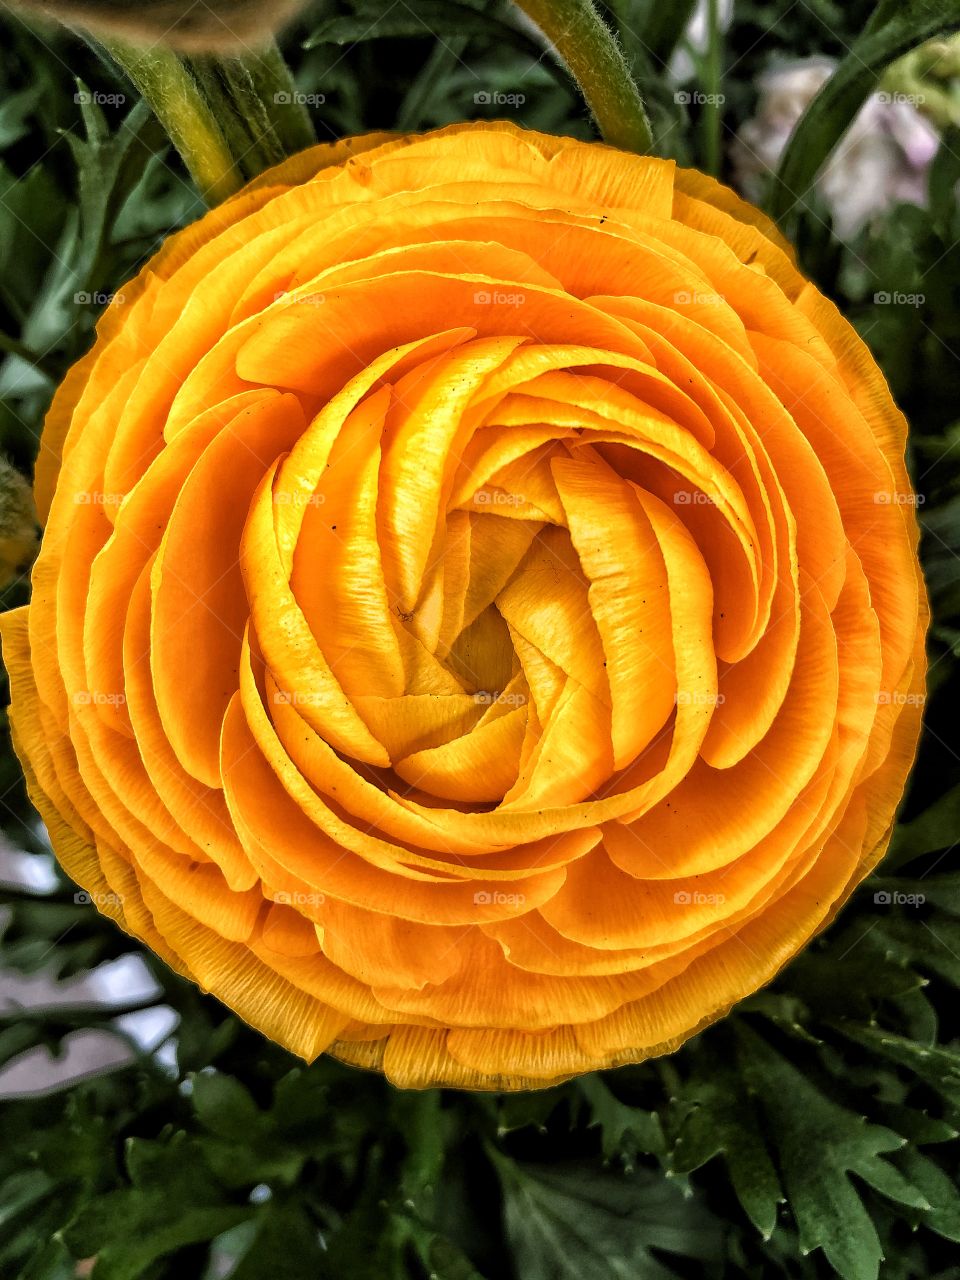 Orange and yellow flower close up